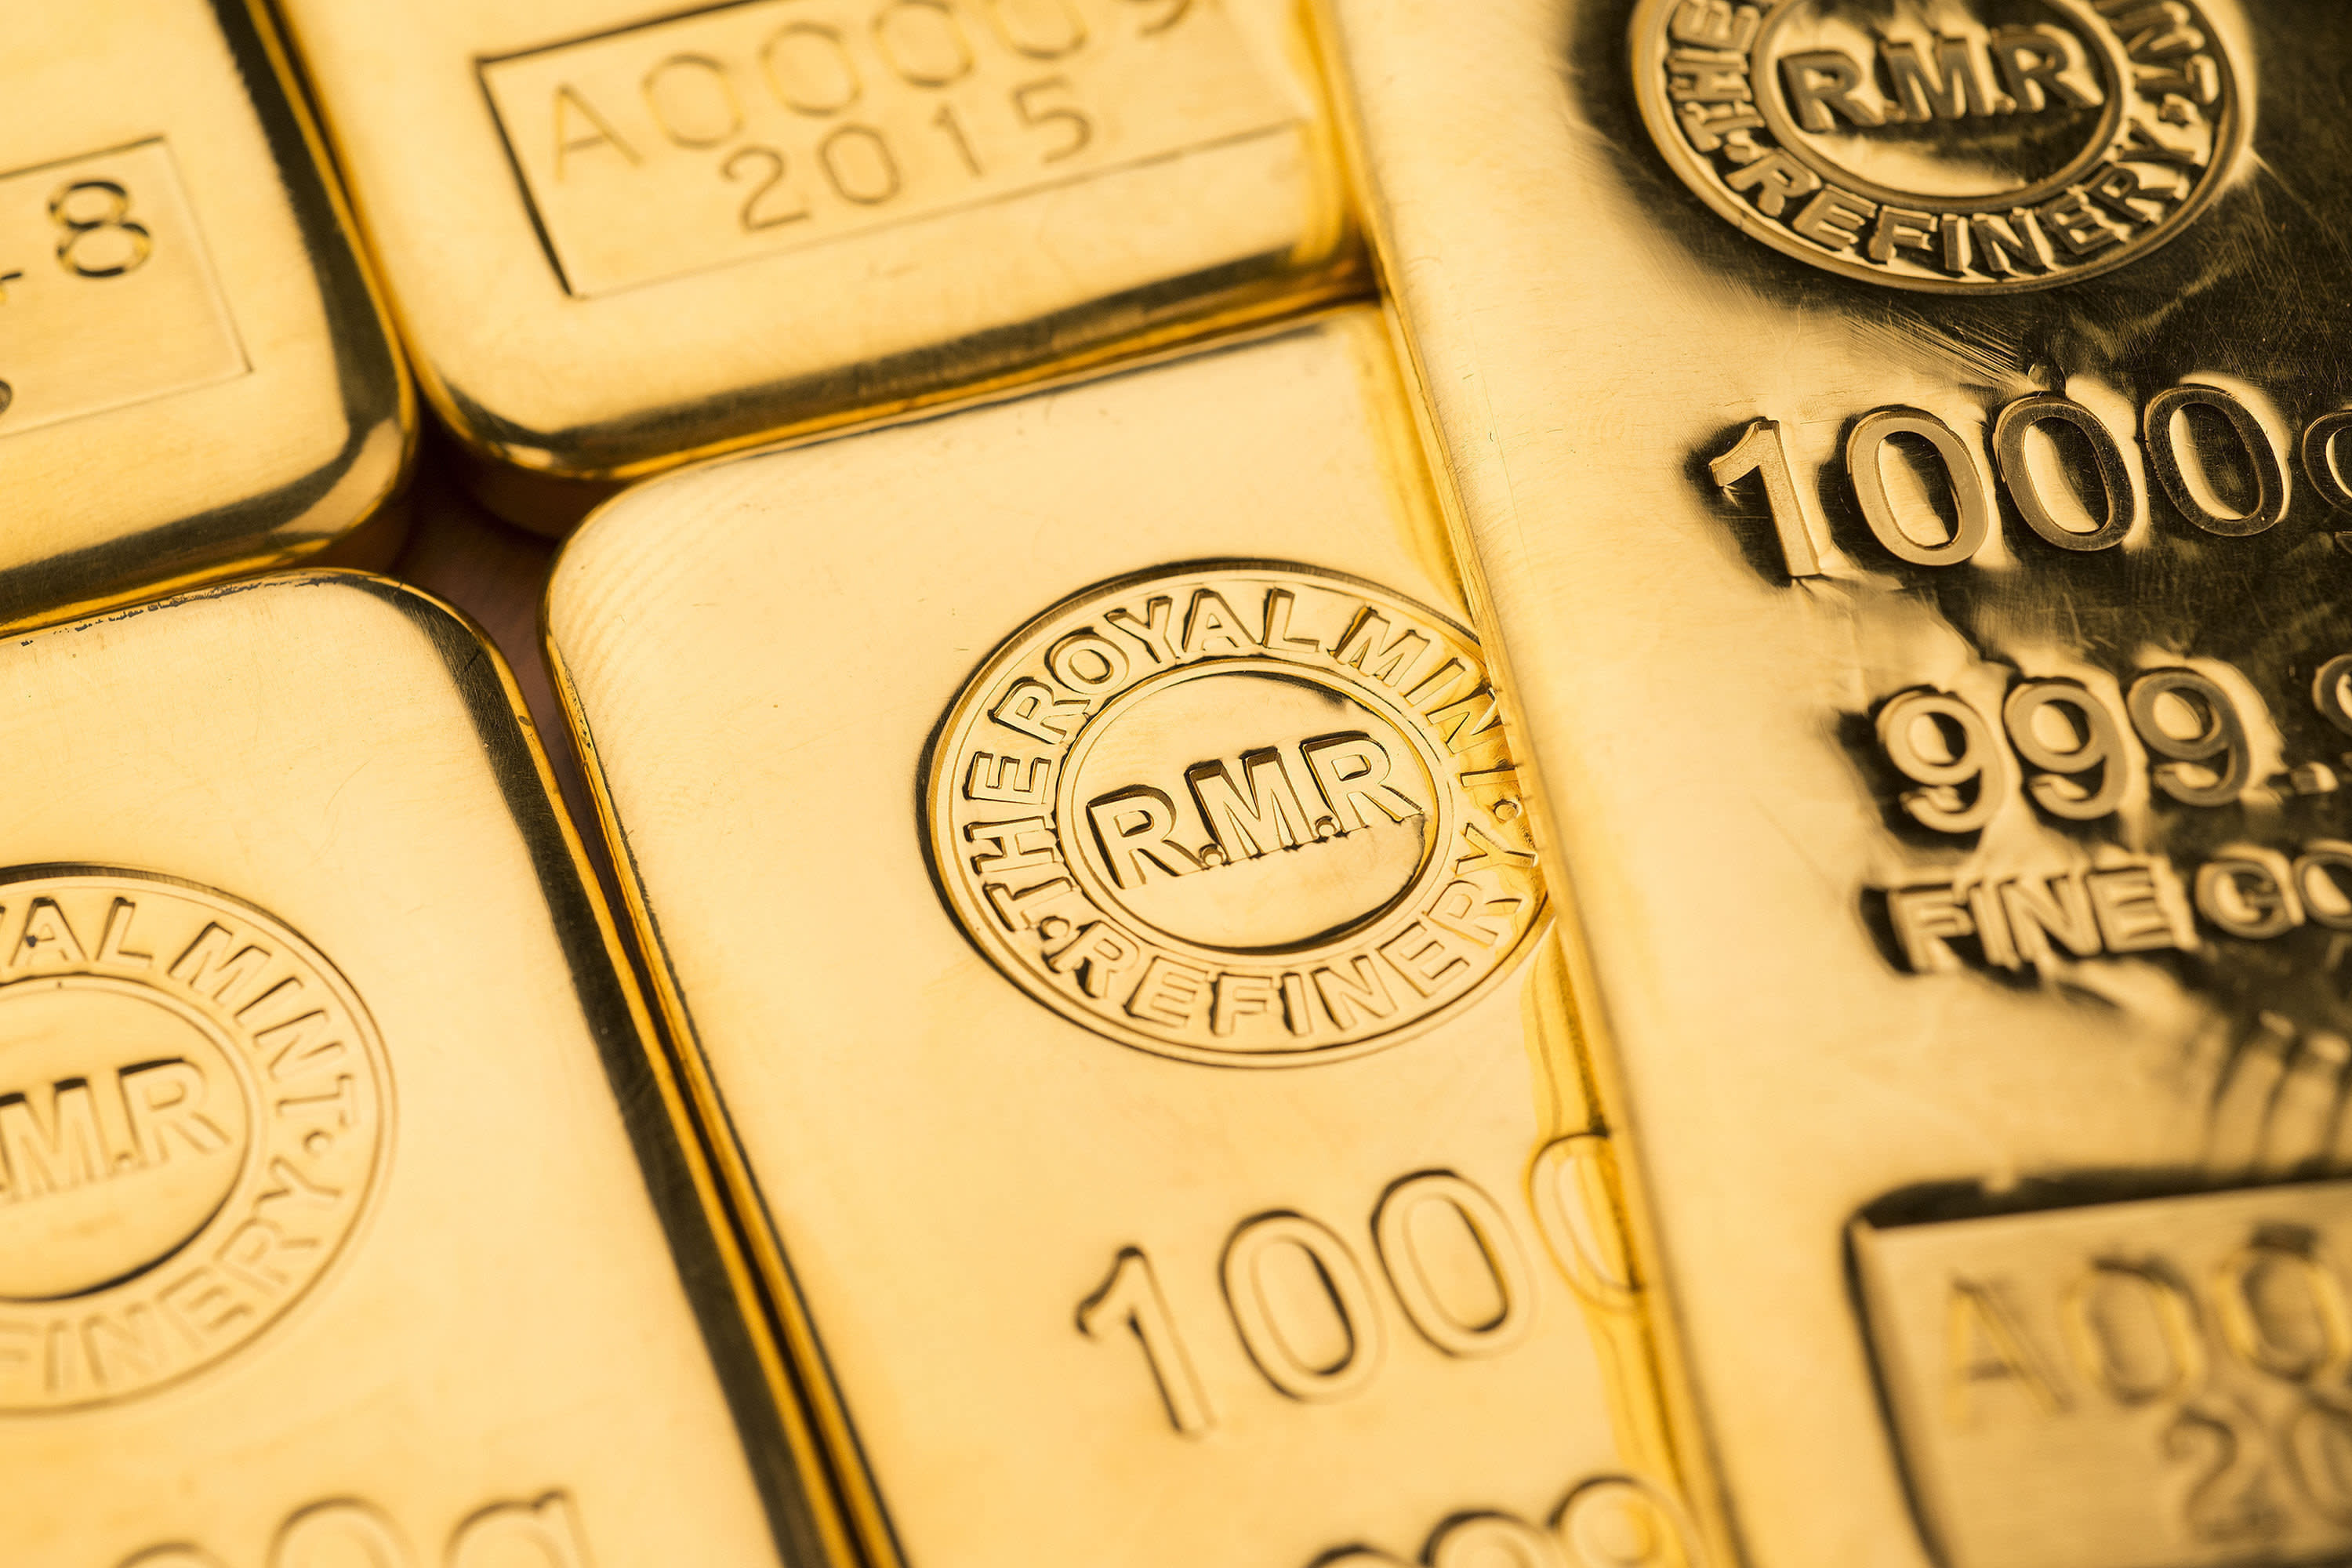 Tax dodge scheme paying salaries in gold censured